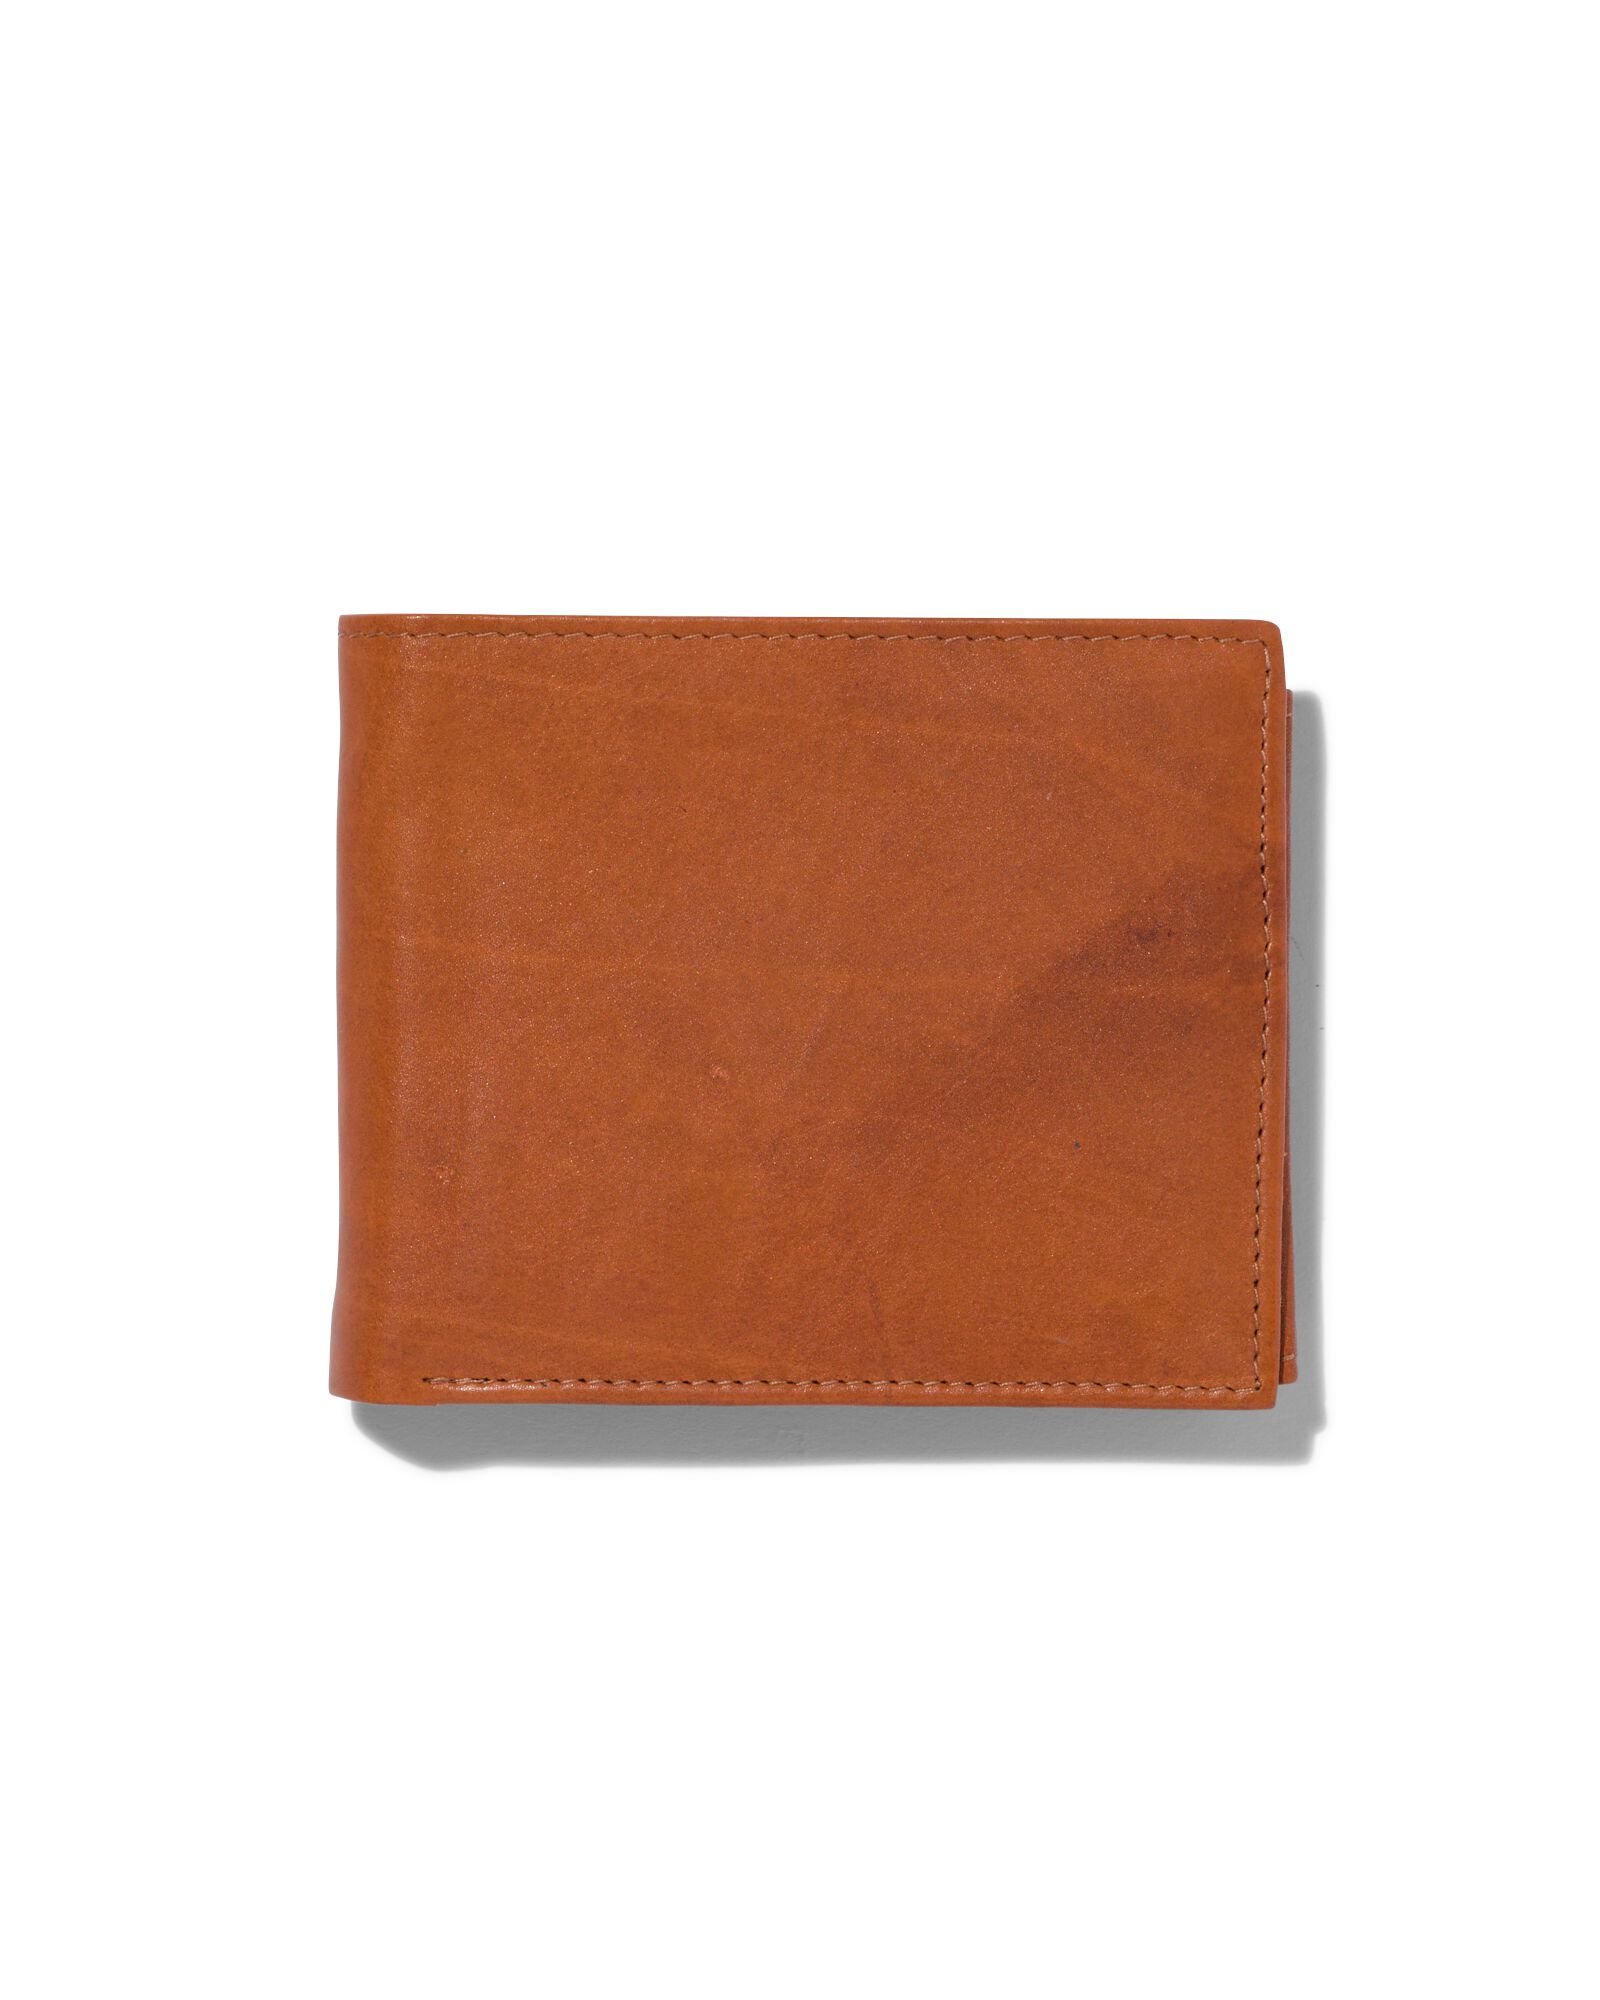 hema portemonnaie billfold cuir marron rfid 9.5x11.5